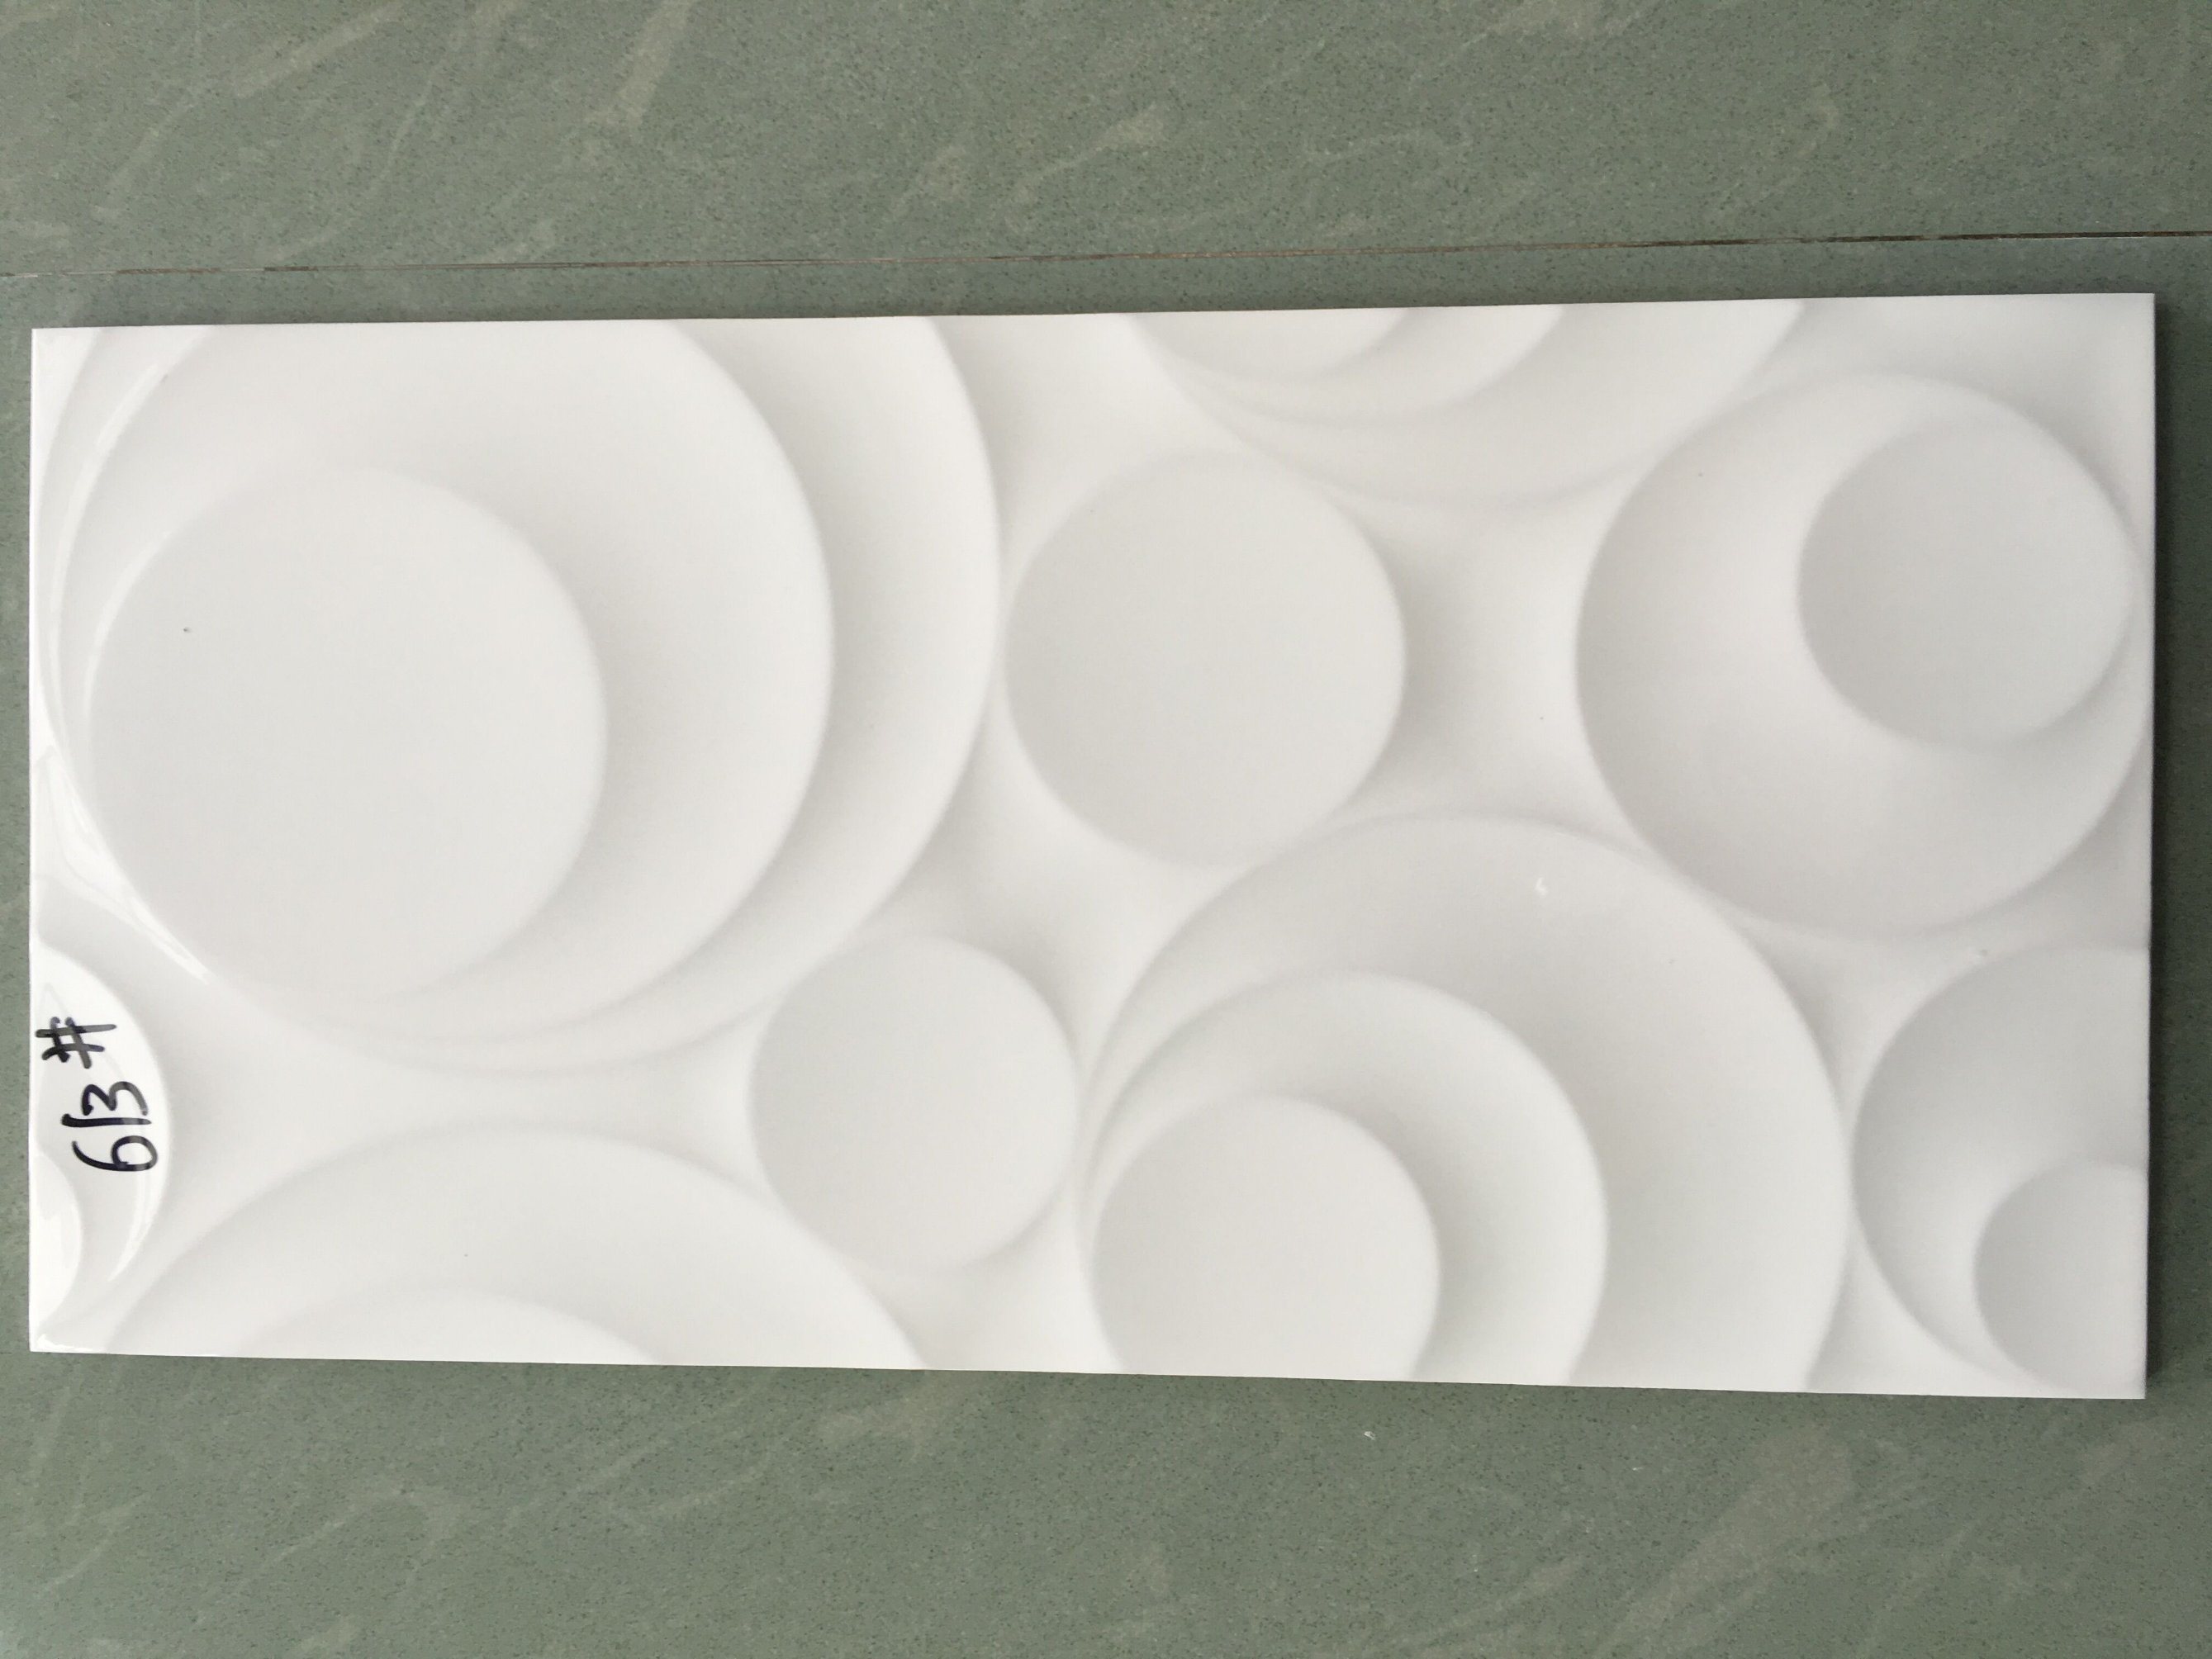 3D Printing Ceramic Tiles Wall Tiles 30*60 Cm